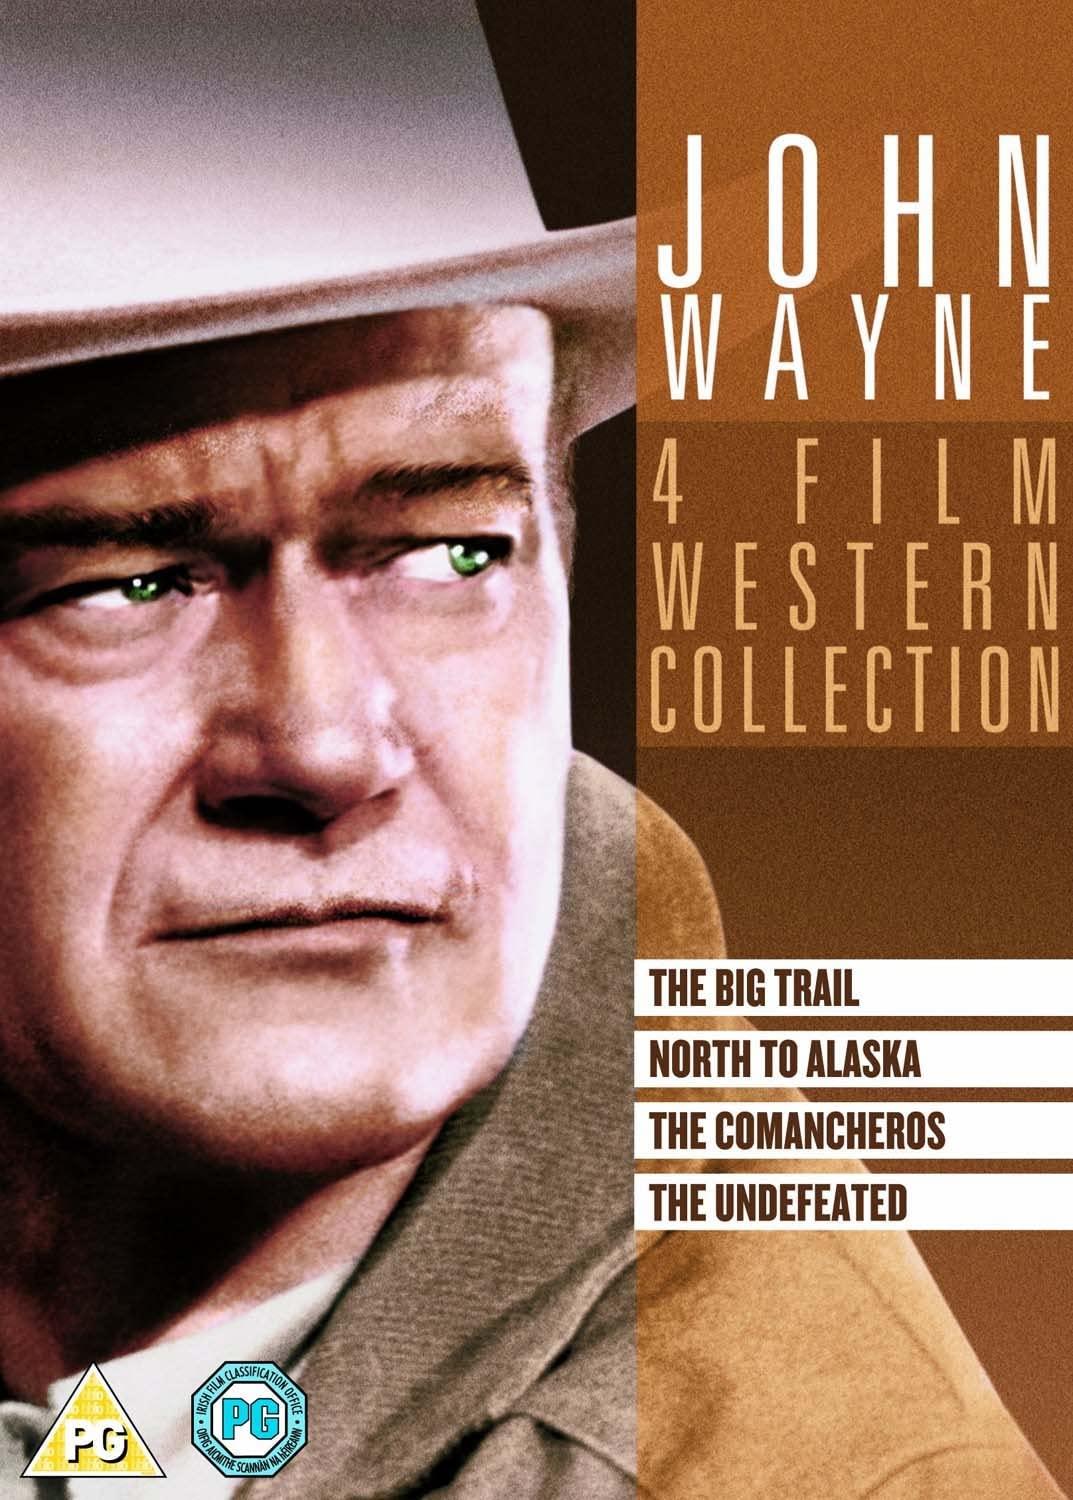 John Wayne 4 Film Western Collection 4DVD